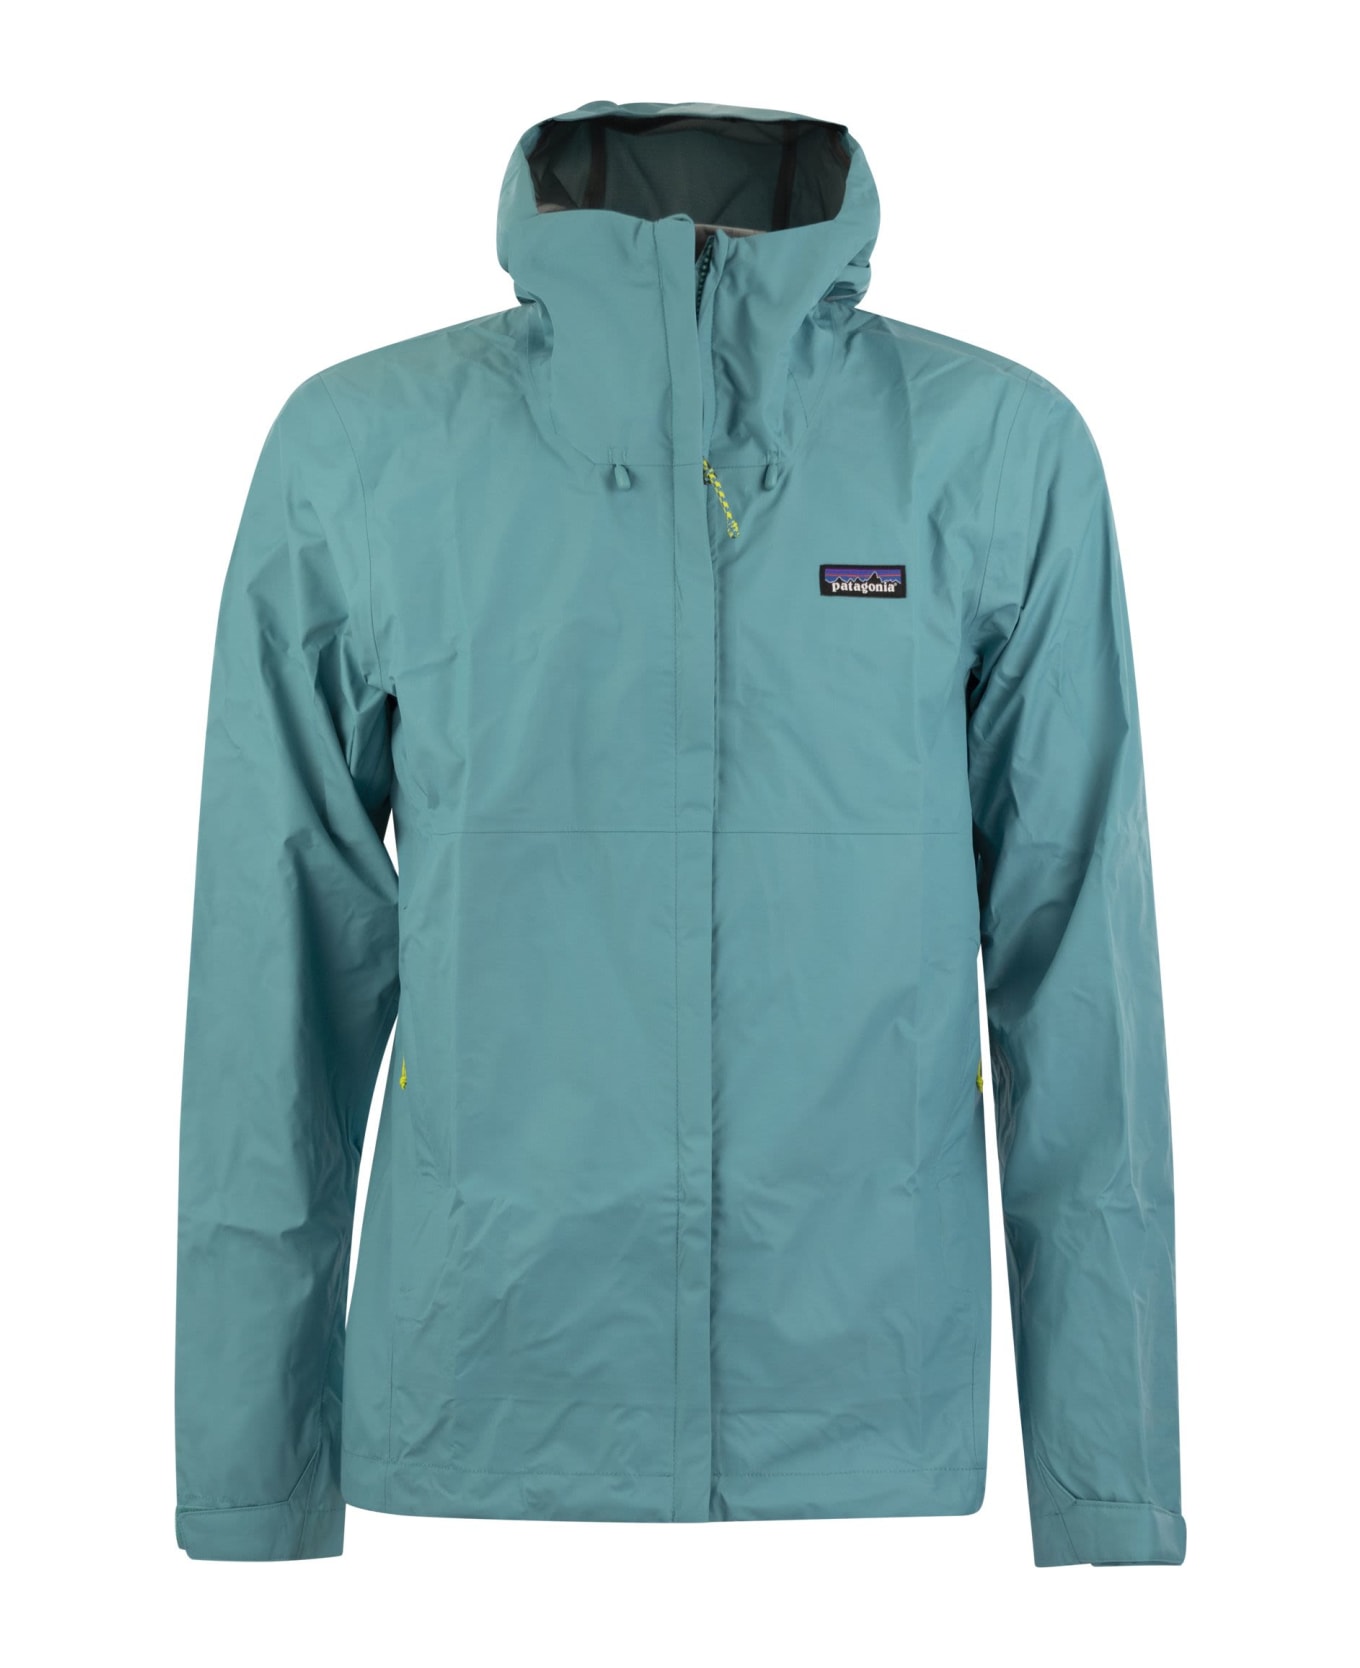 Patagonia Nylon Rainproof Jacket - Light Blue